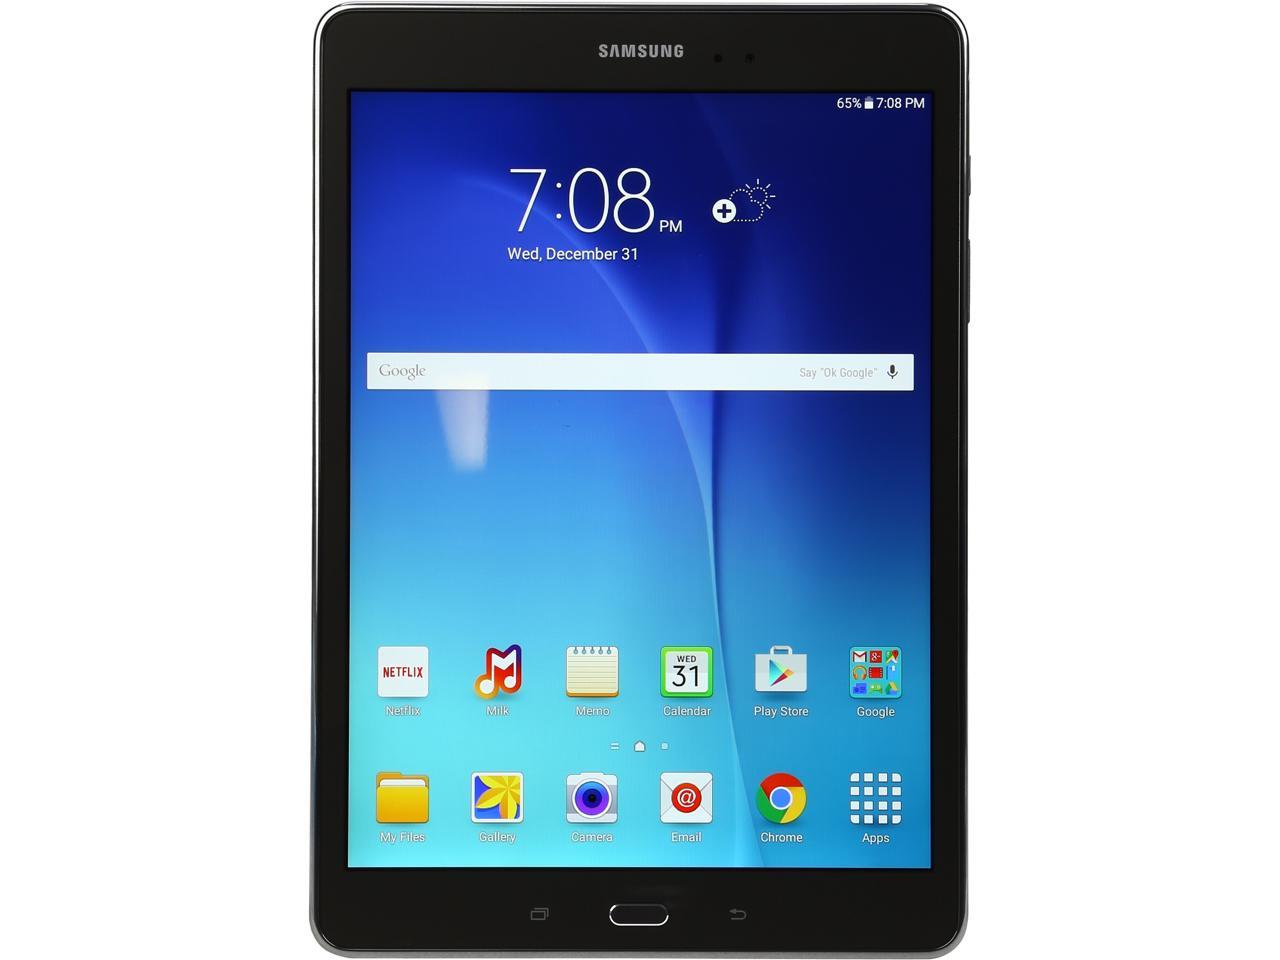 SAMSUNG Galaxy Tab A 9.7 Qualcomm APQ8016 (1.20 GHz) 1.5 GB Memory 16 GB Flash Storage 9.7\" 1024 x 768 Tablet Android 5.0 (Lollipop) Smoky Titanium